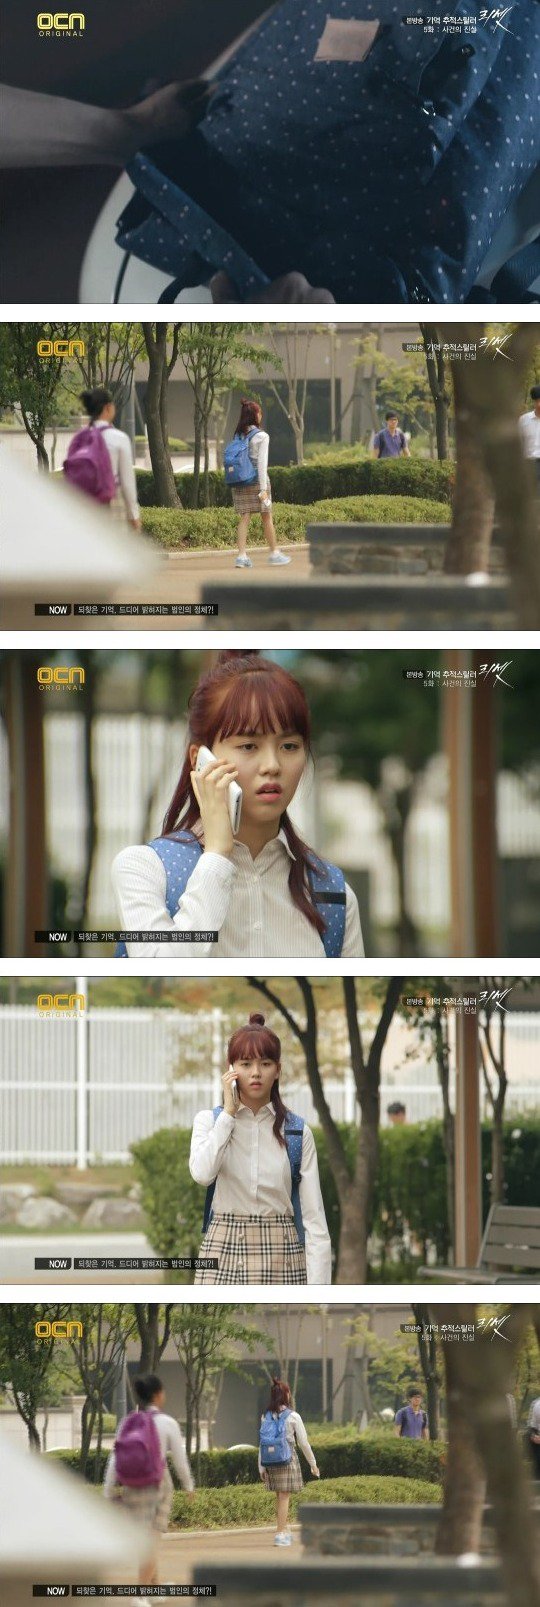 episode 5 capture for the Korean drama 'Reset'